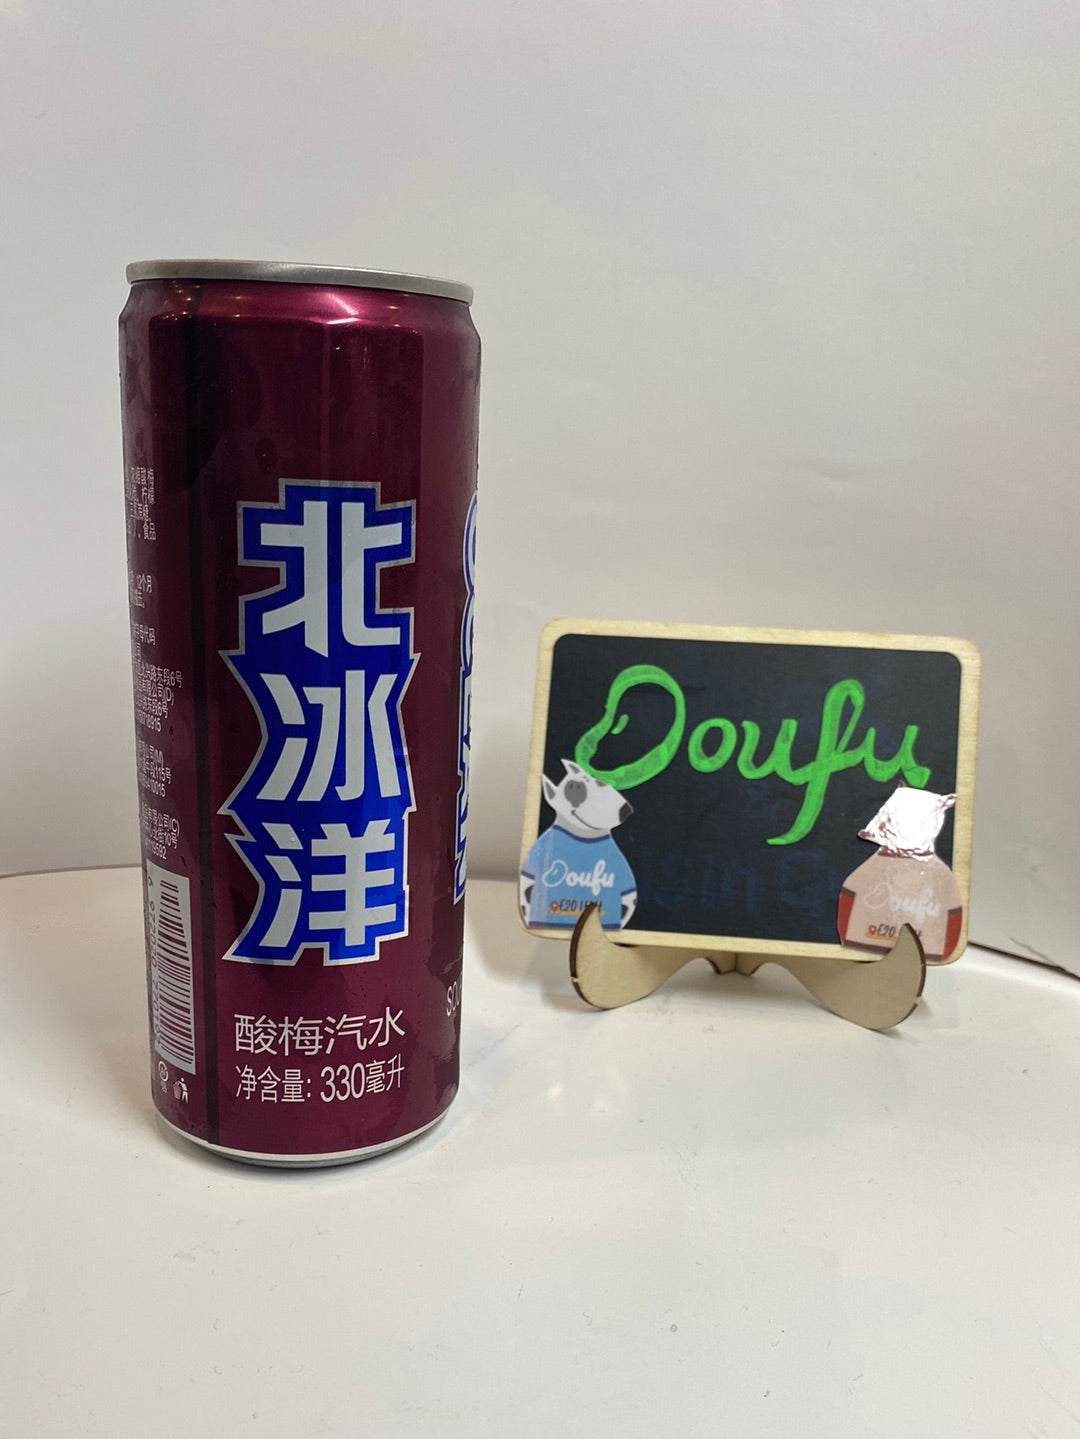 BBY-sour plum soda drink 330ml 北冰洋酸梅汽水